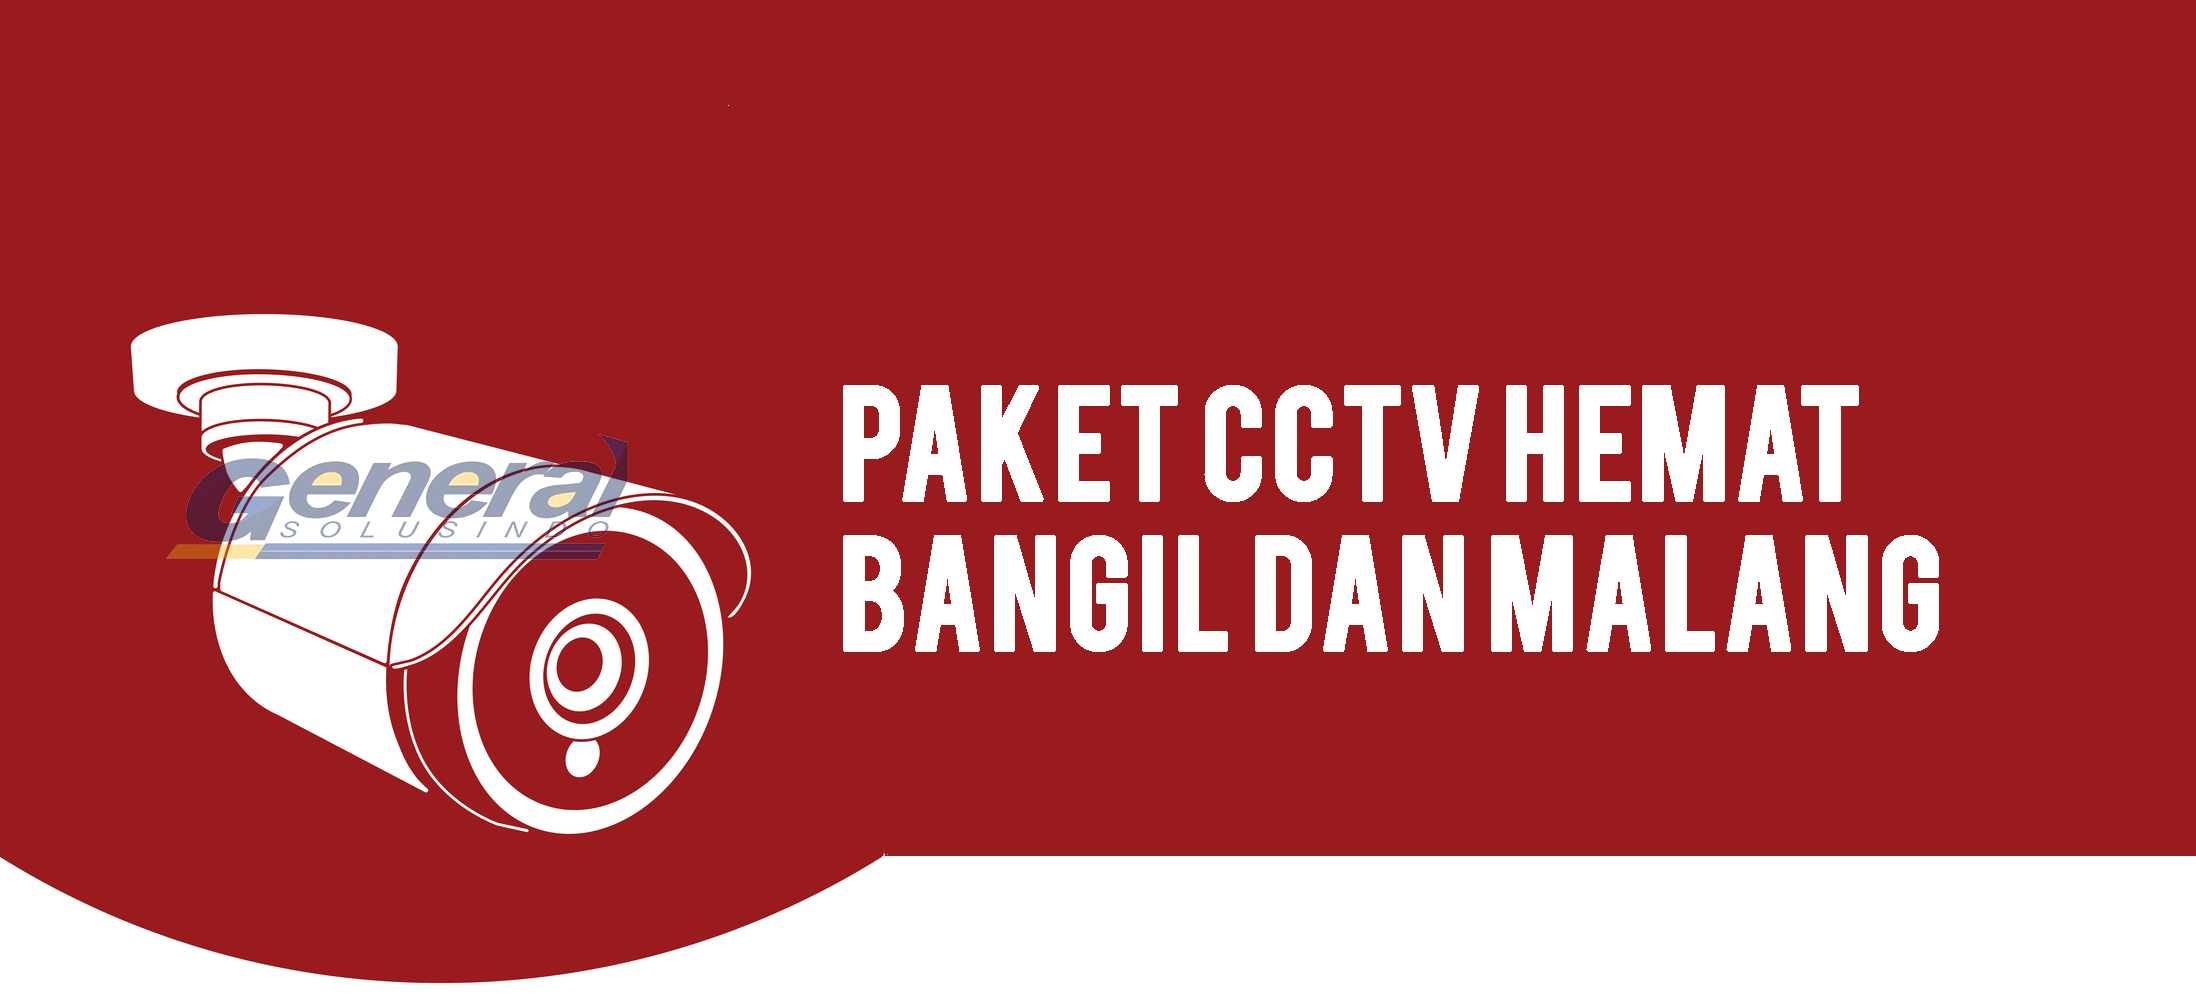 Paket-CCTV-hemat-bangil-dan-malang-12422292